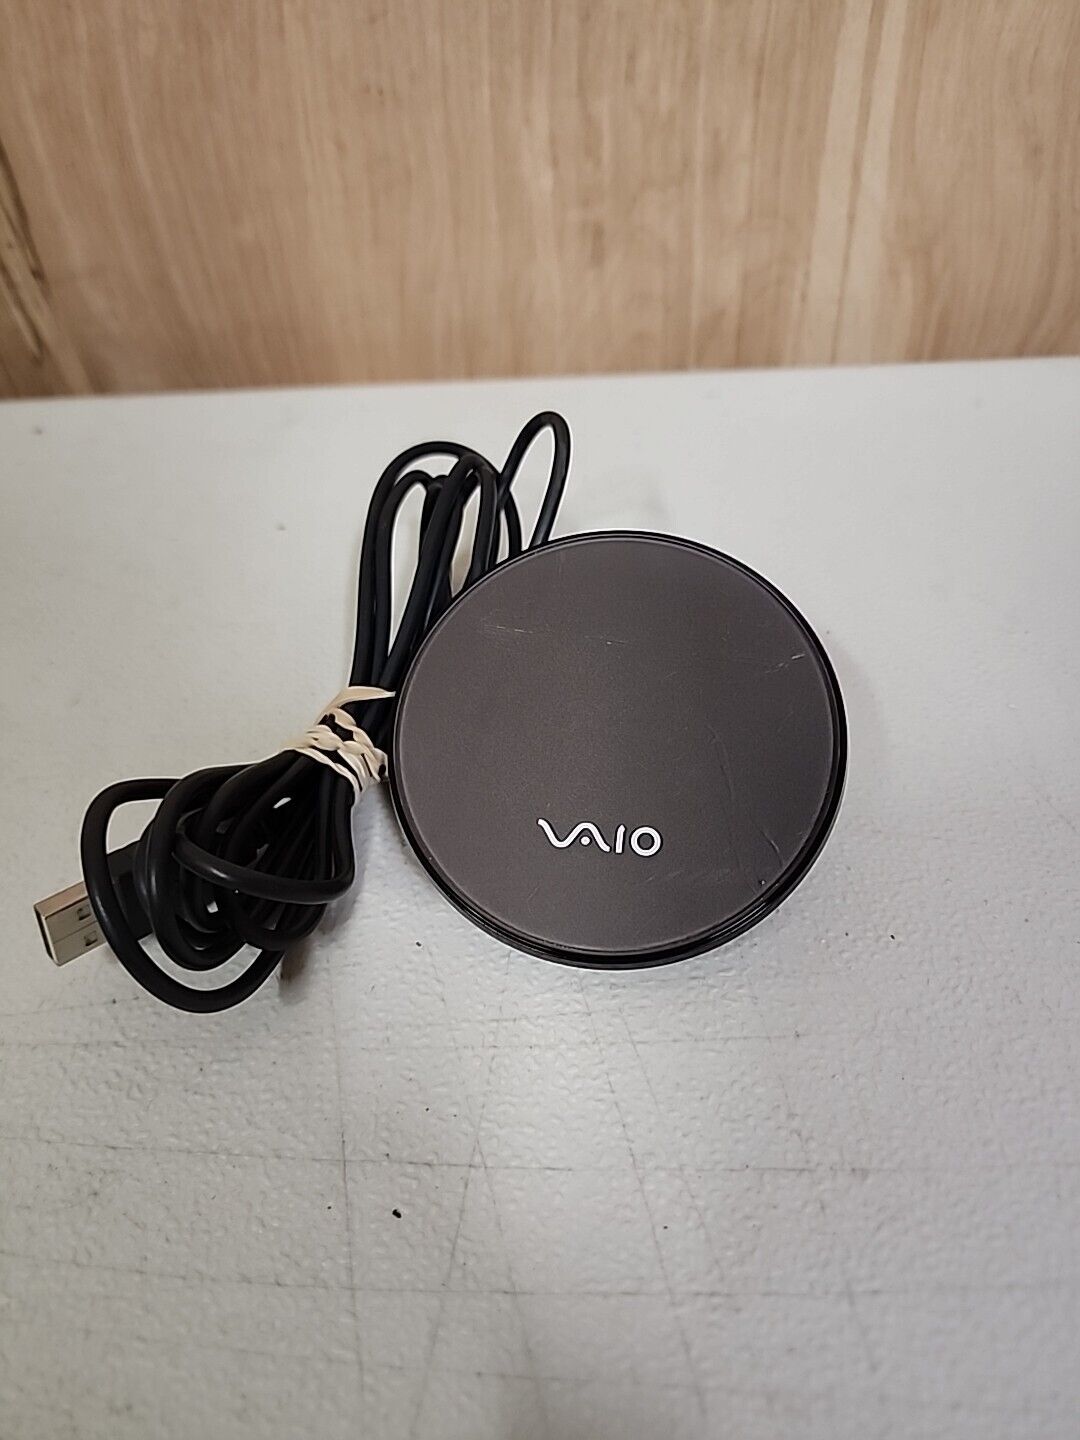 Sony Vaio Wireless Reciever Vga-wrc2